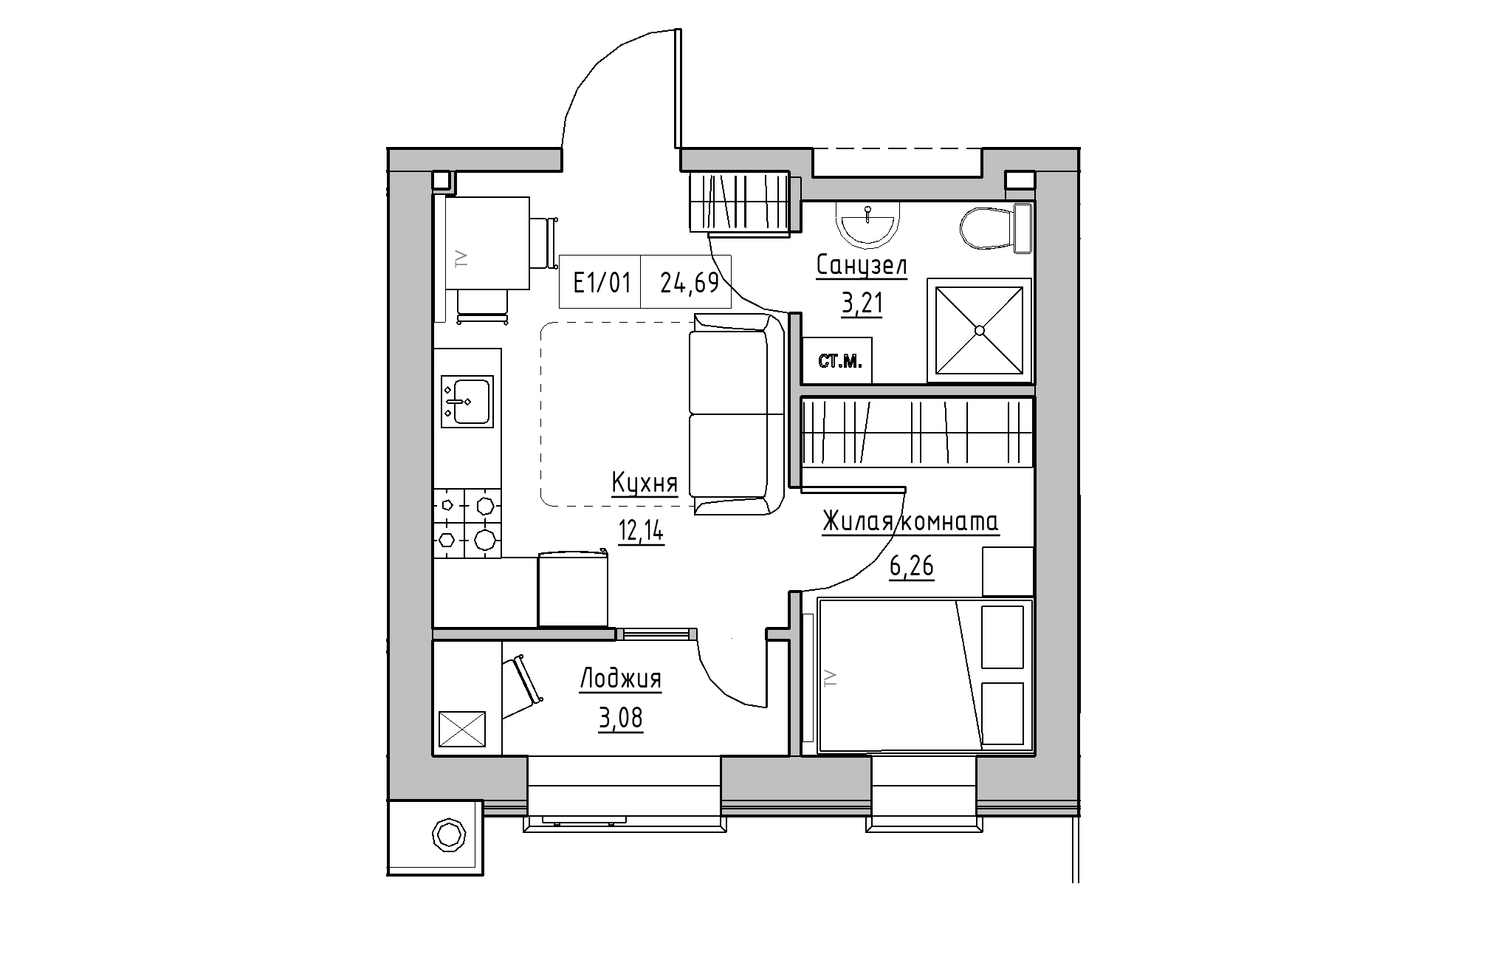 Planning 1-rm flats area 24.69m2, KS-013-03/0012.